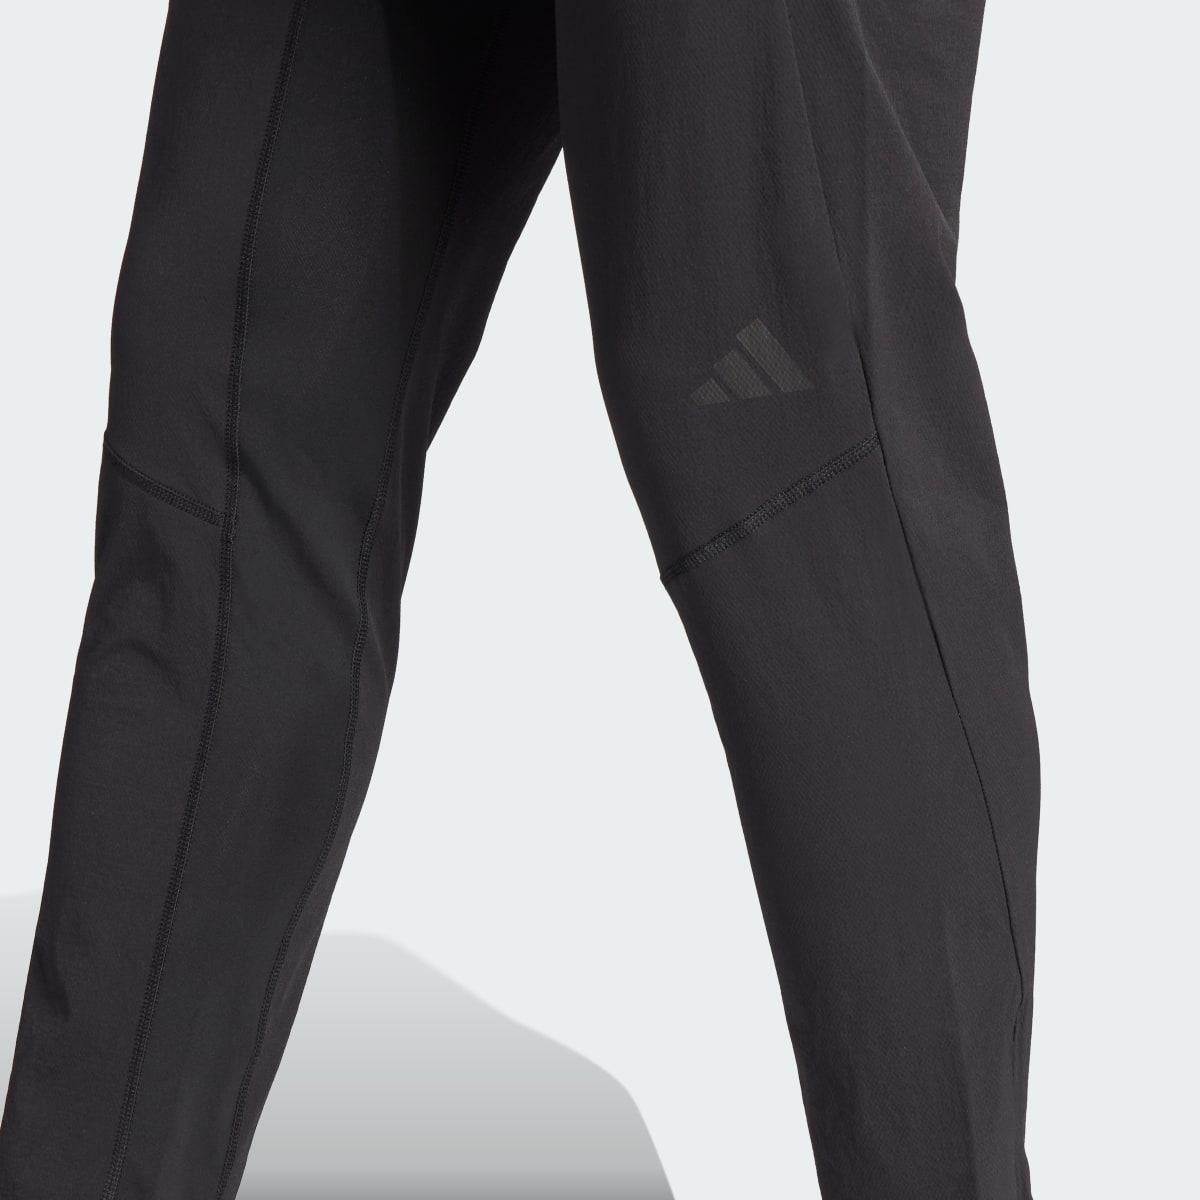 Adidas Designed for Training CORDURA Workout Pants. 8